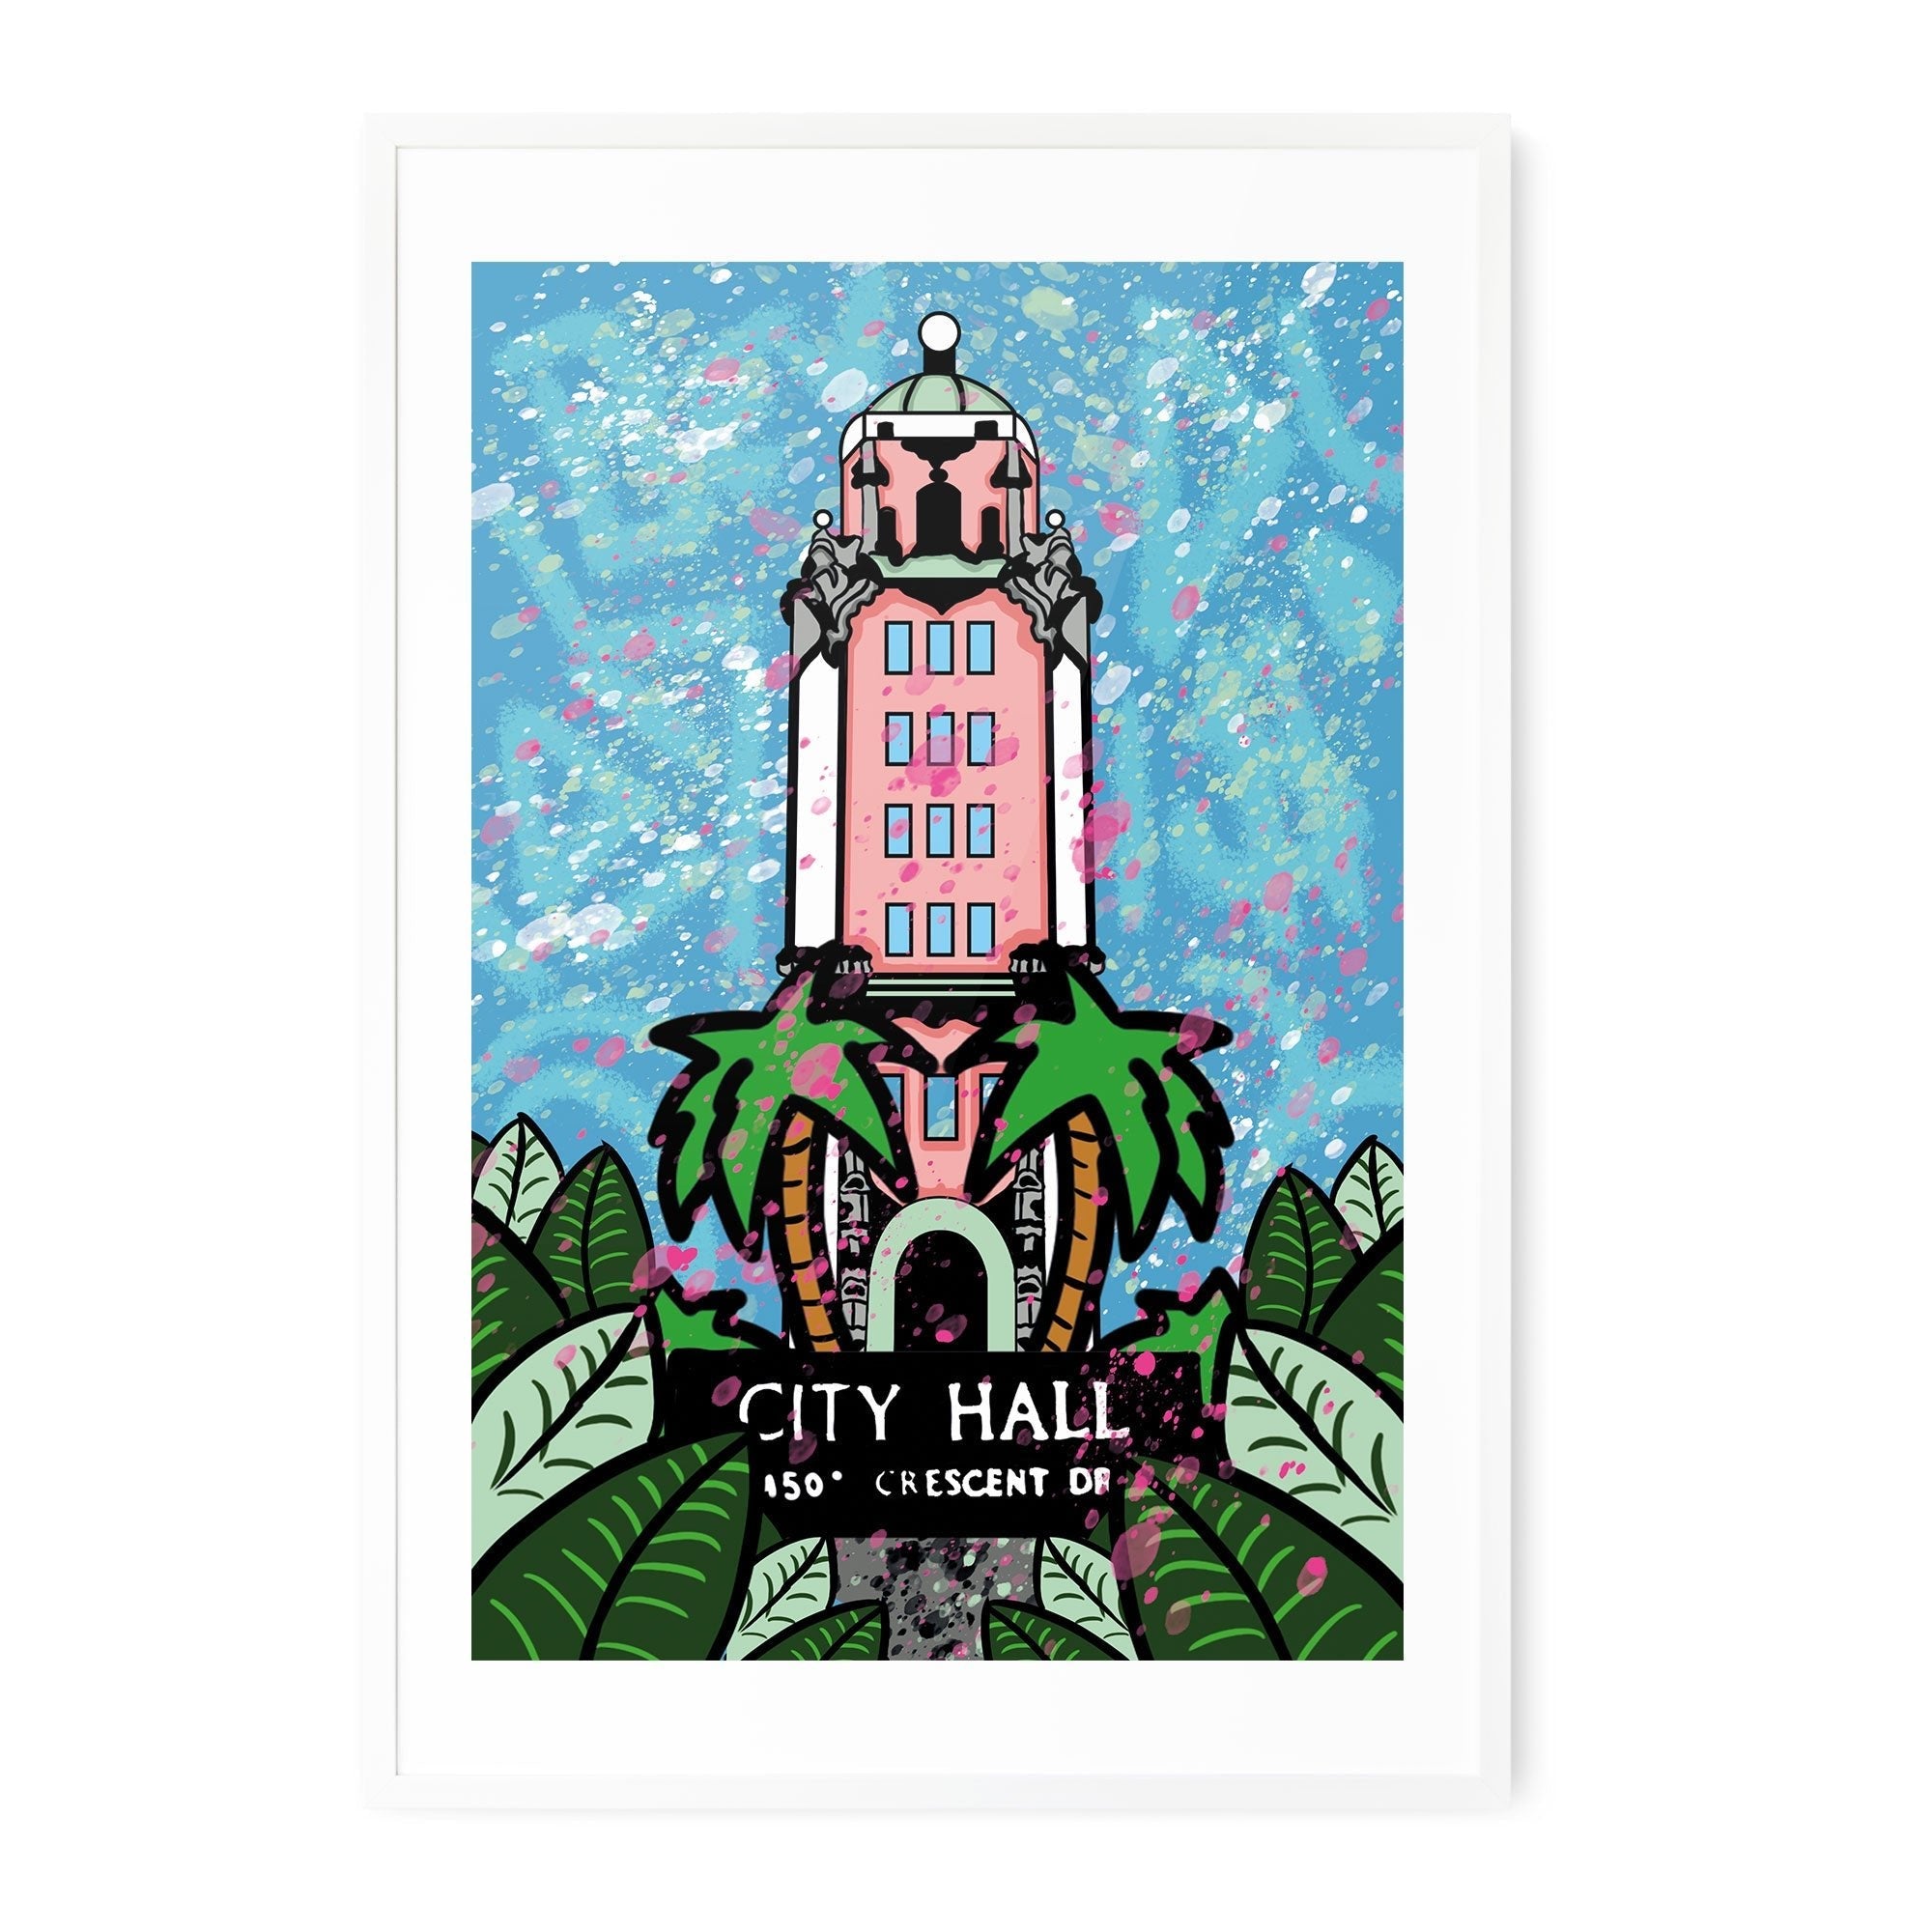 Beverly Hills: City Hall